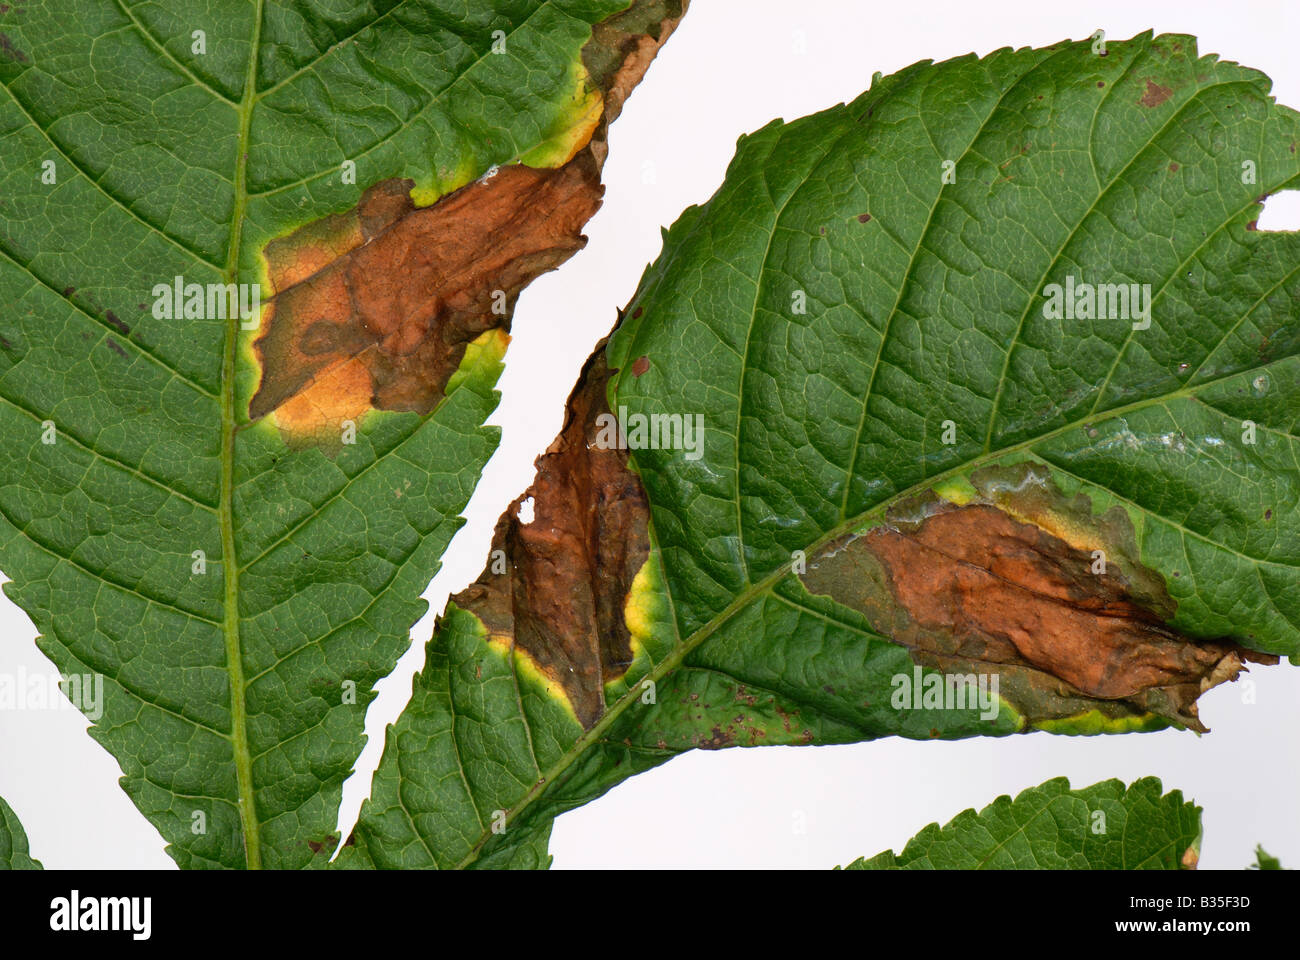 Horse chestnut leaf blotch Guignardia aesculi spots on a horse chestnut leaf Stock Photo